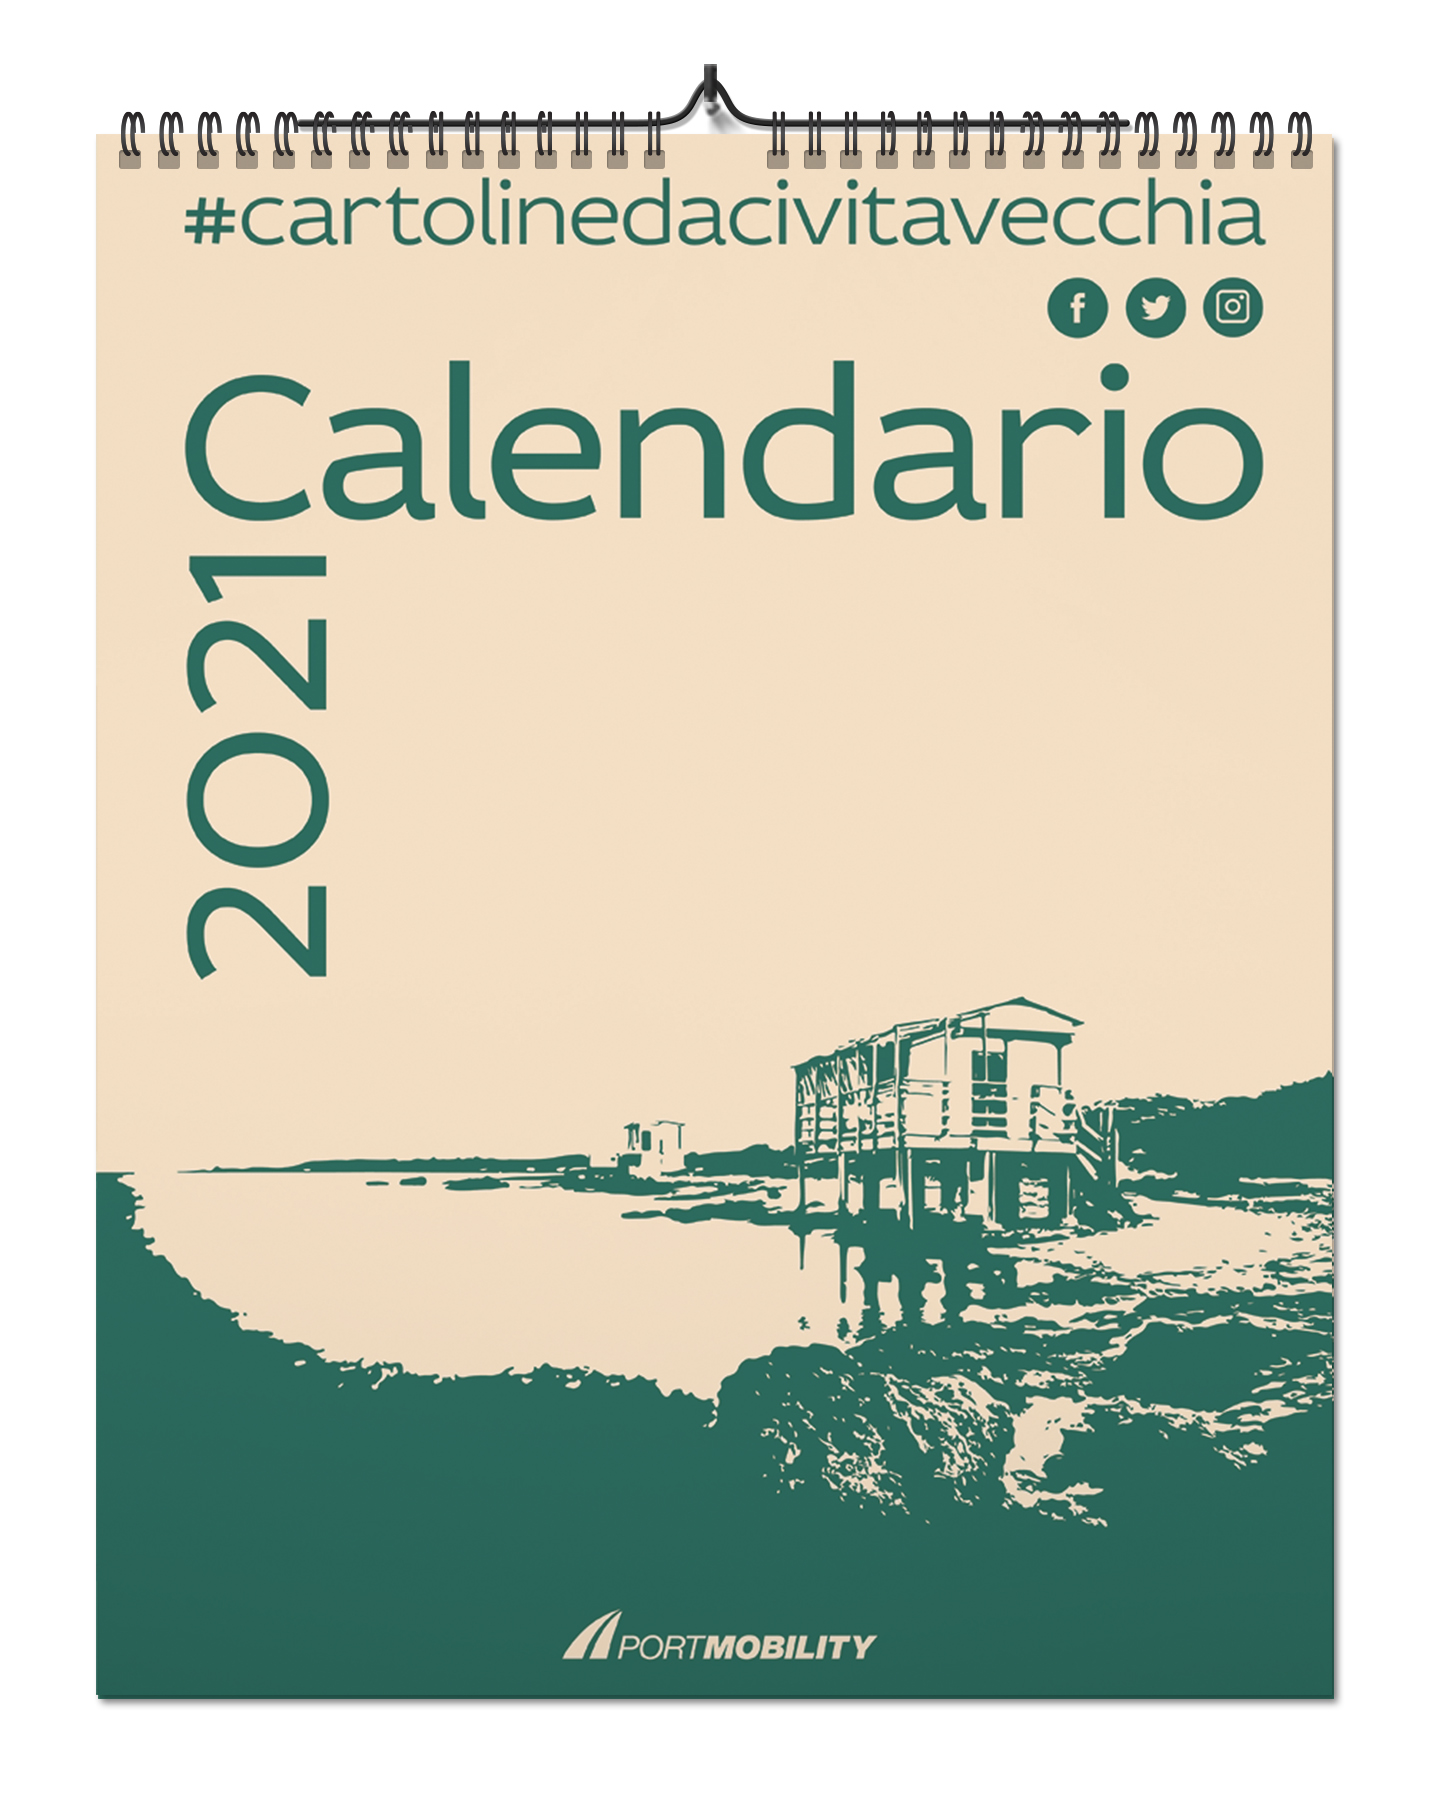 Postcards from Civitavecchia 2021: Calendar cover